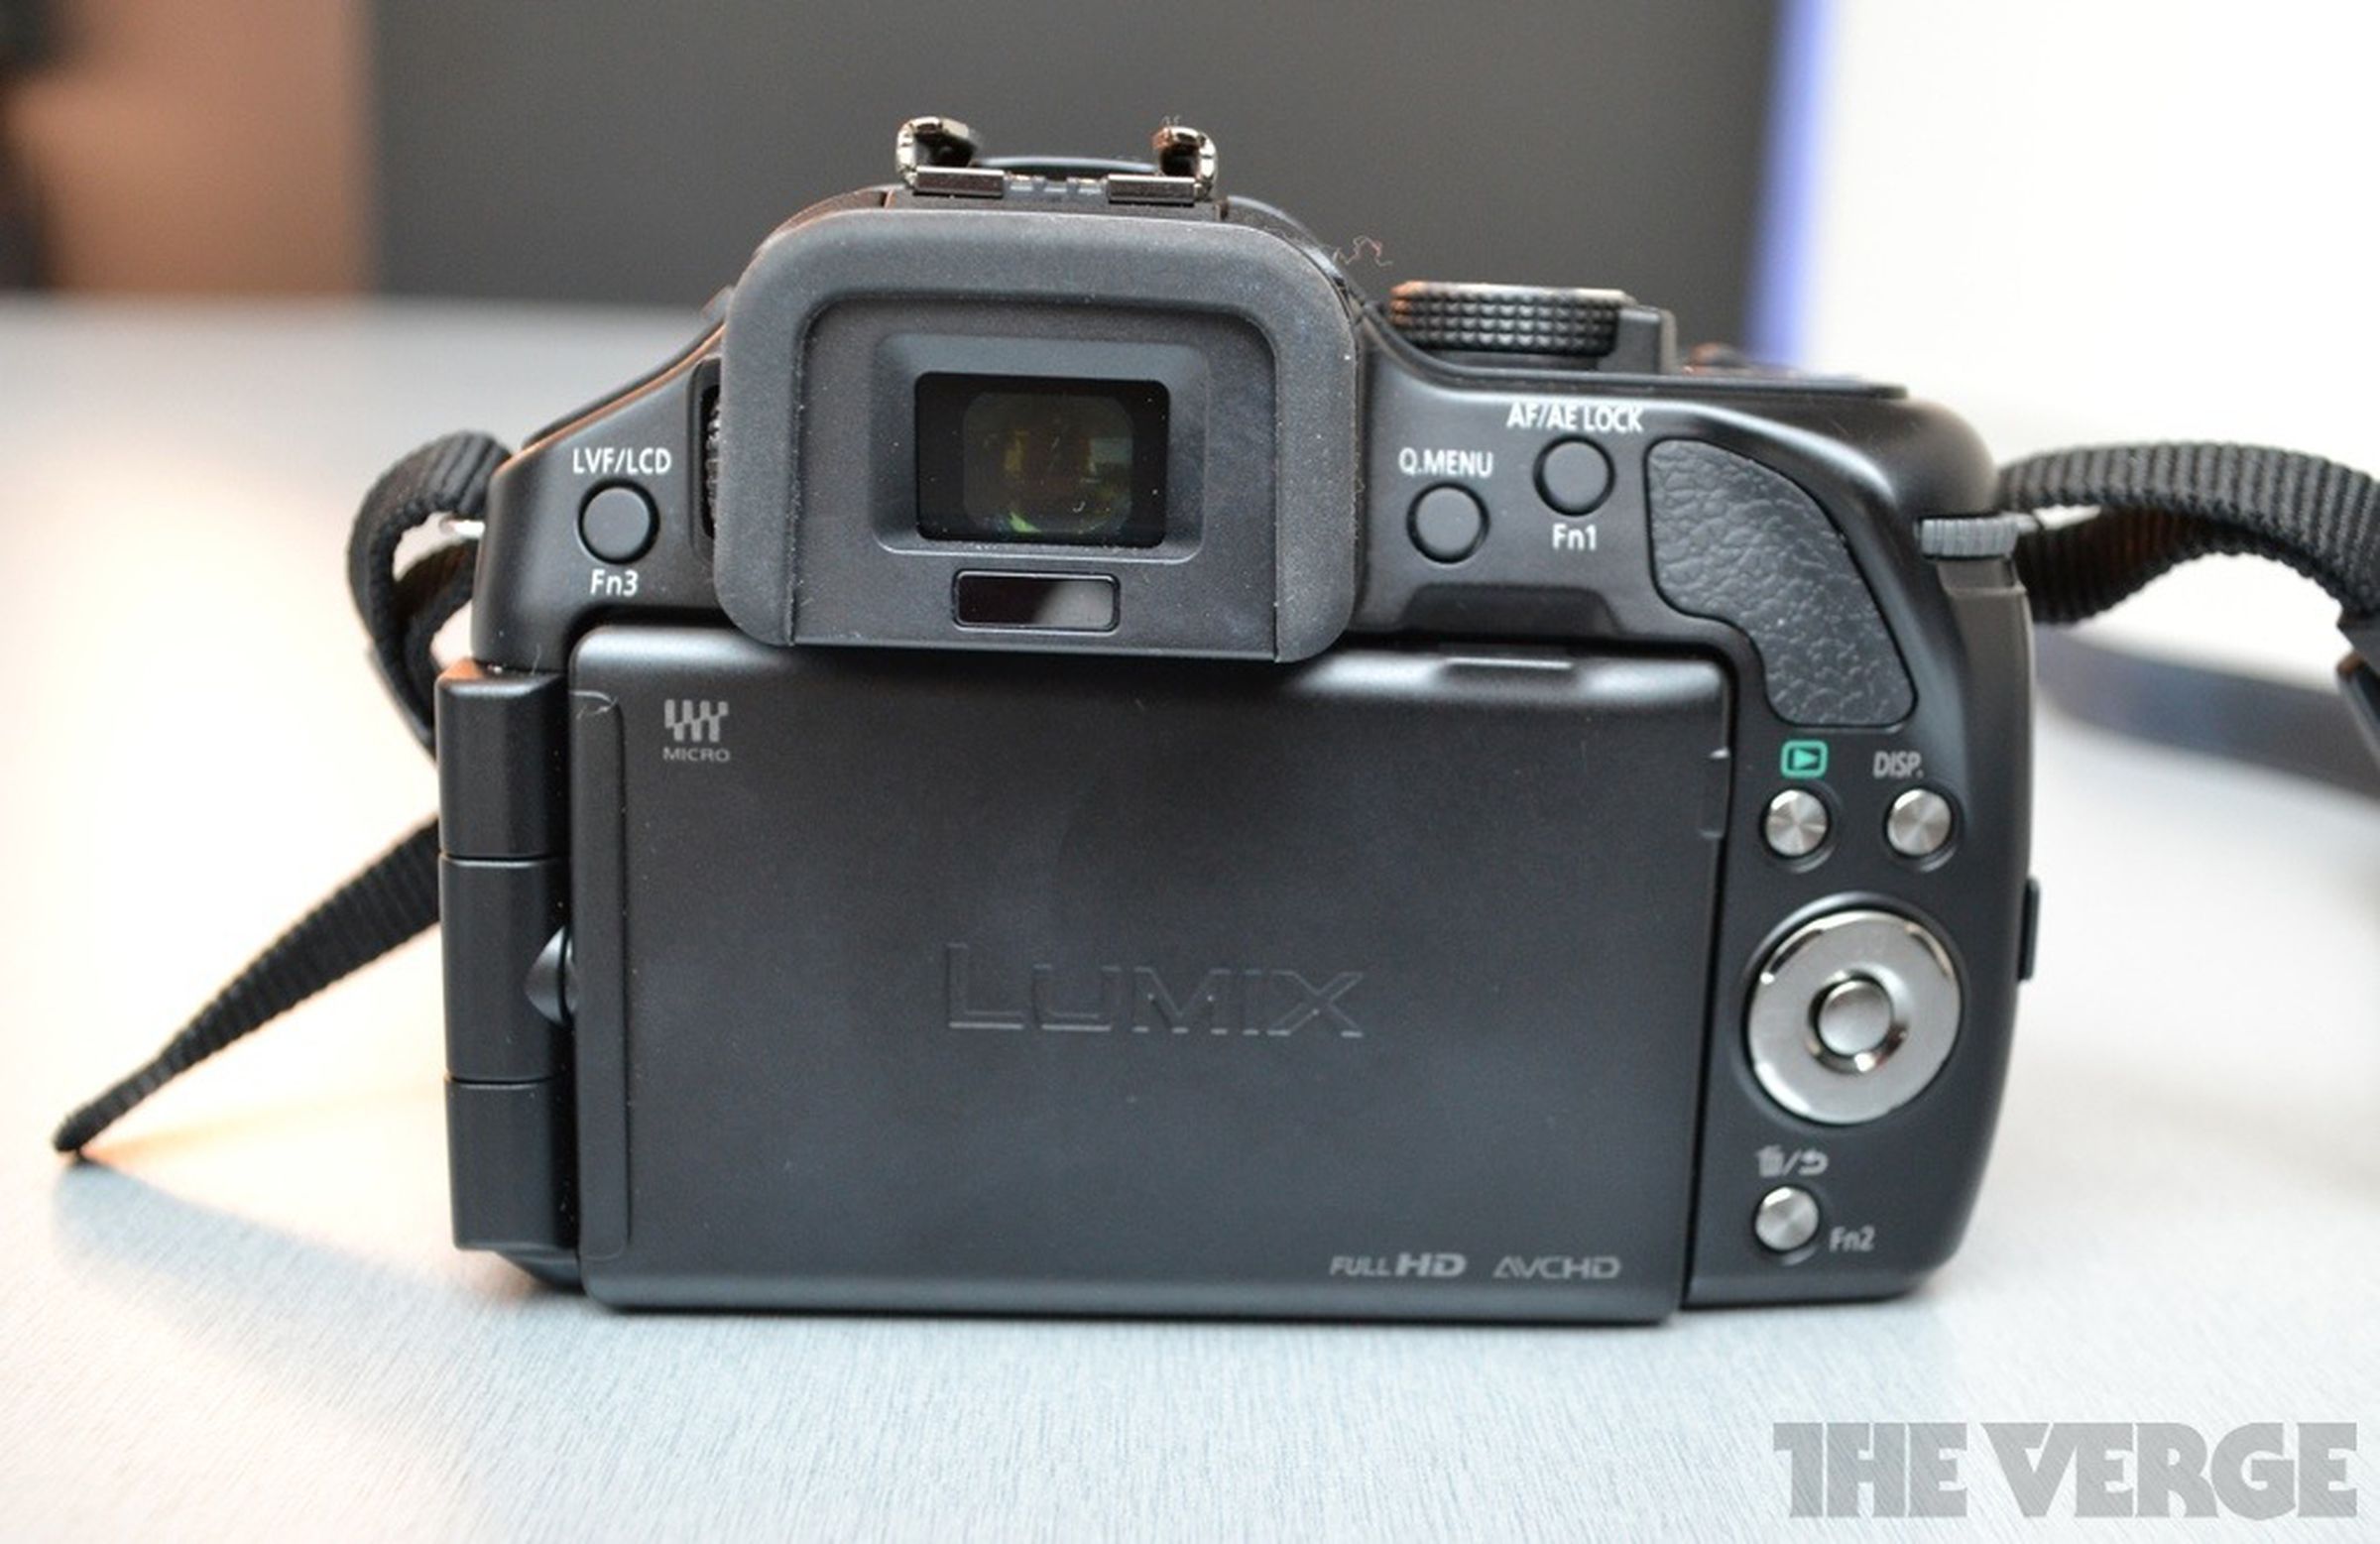 Panasonic Lumix DMC-G5 hands-on pictures